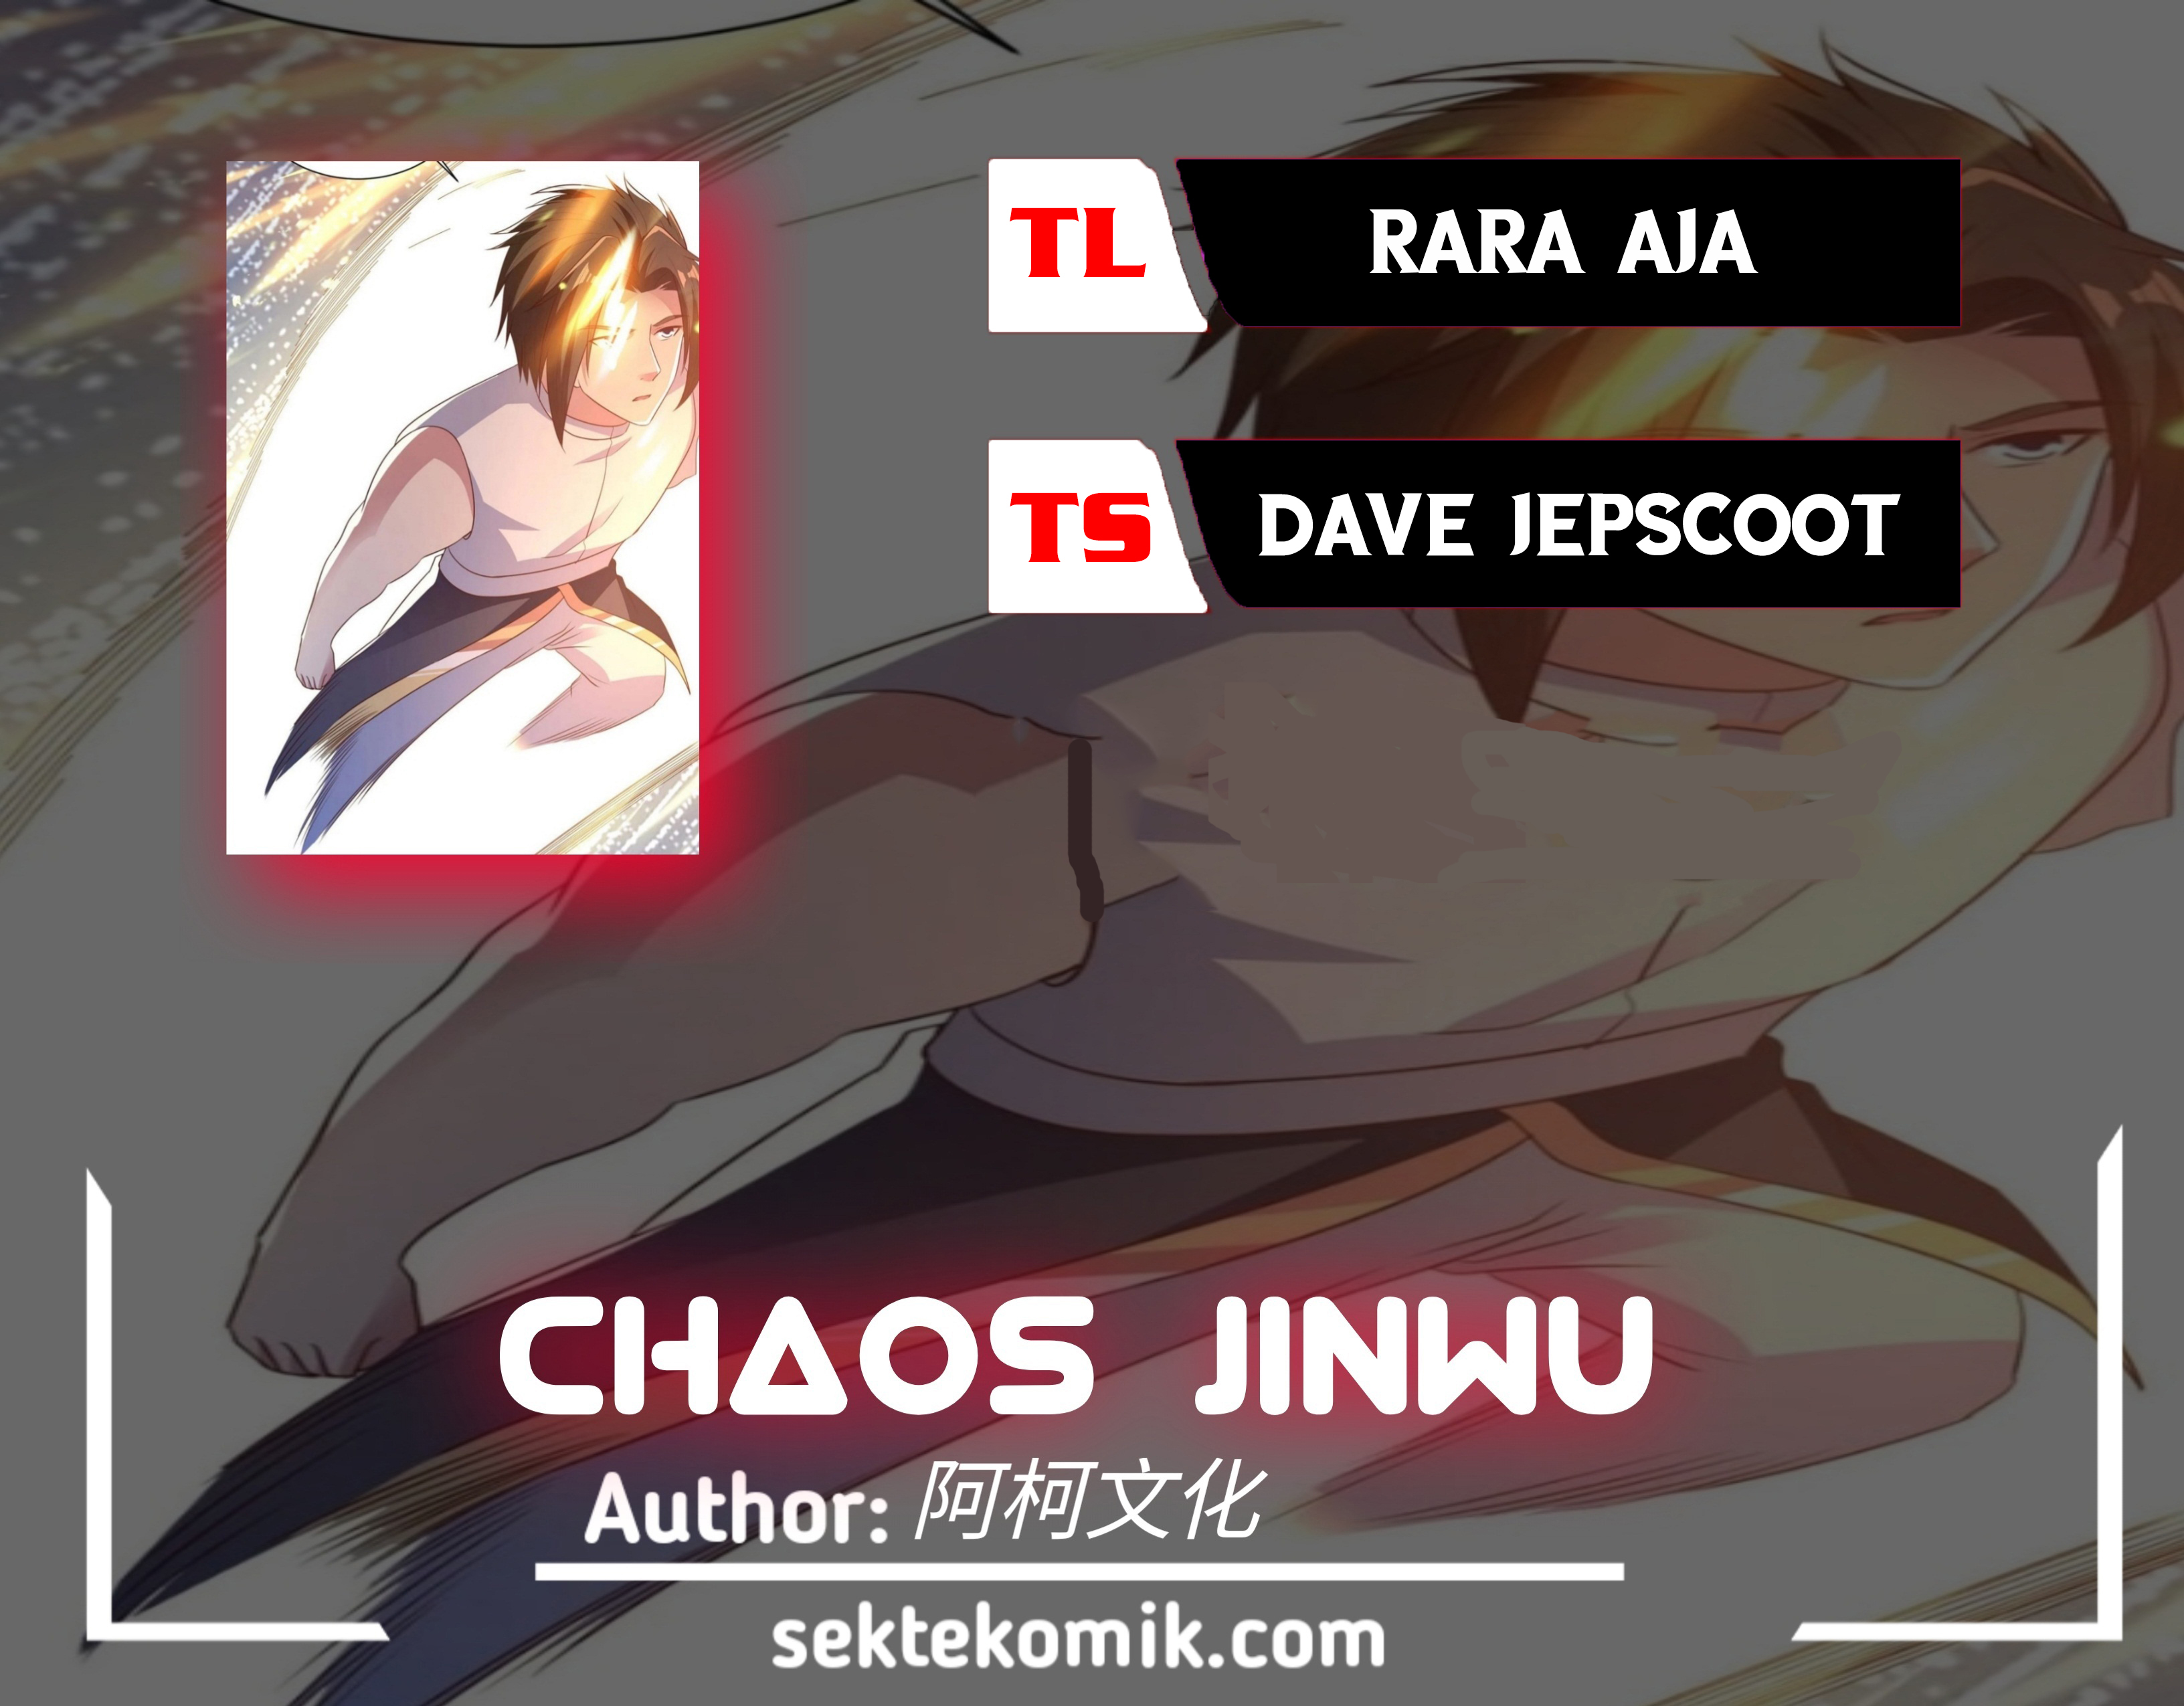 Chaos Jinwu Chapter 92 end